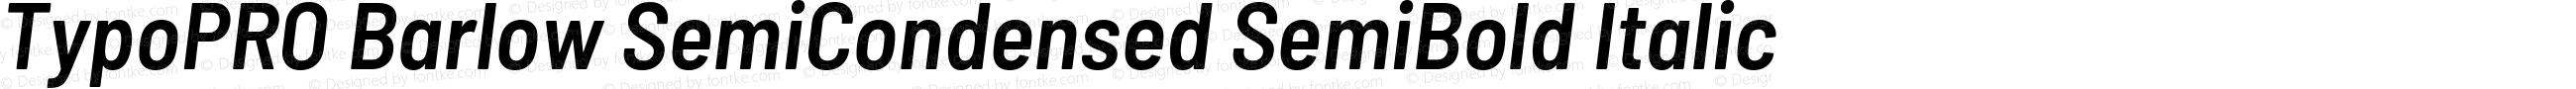 TypoPRO Barlow Semi Condensed SemiBold Italic